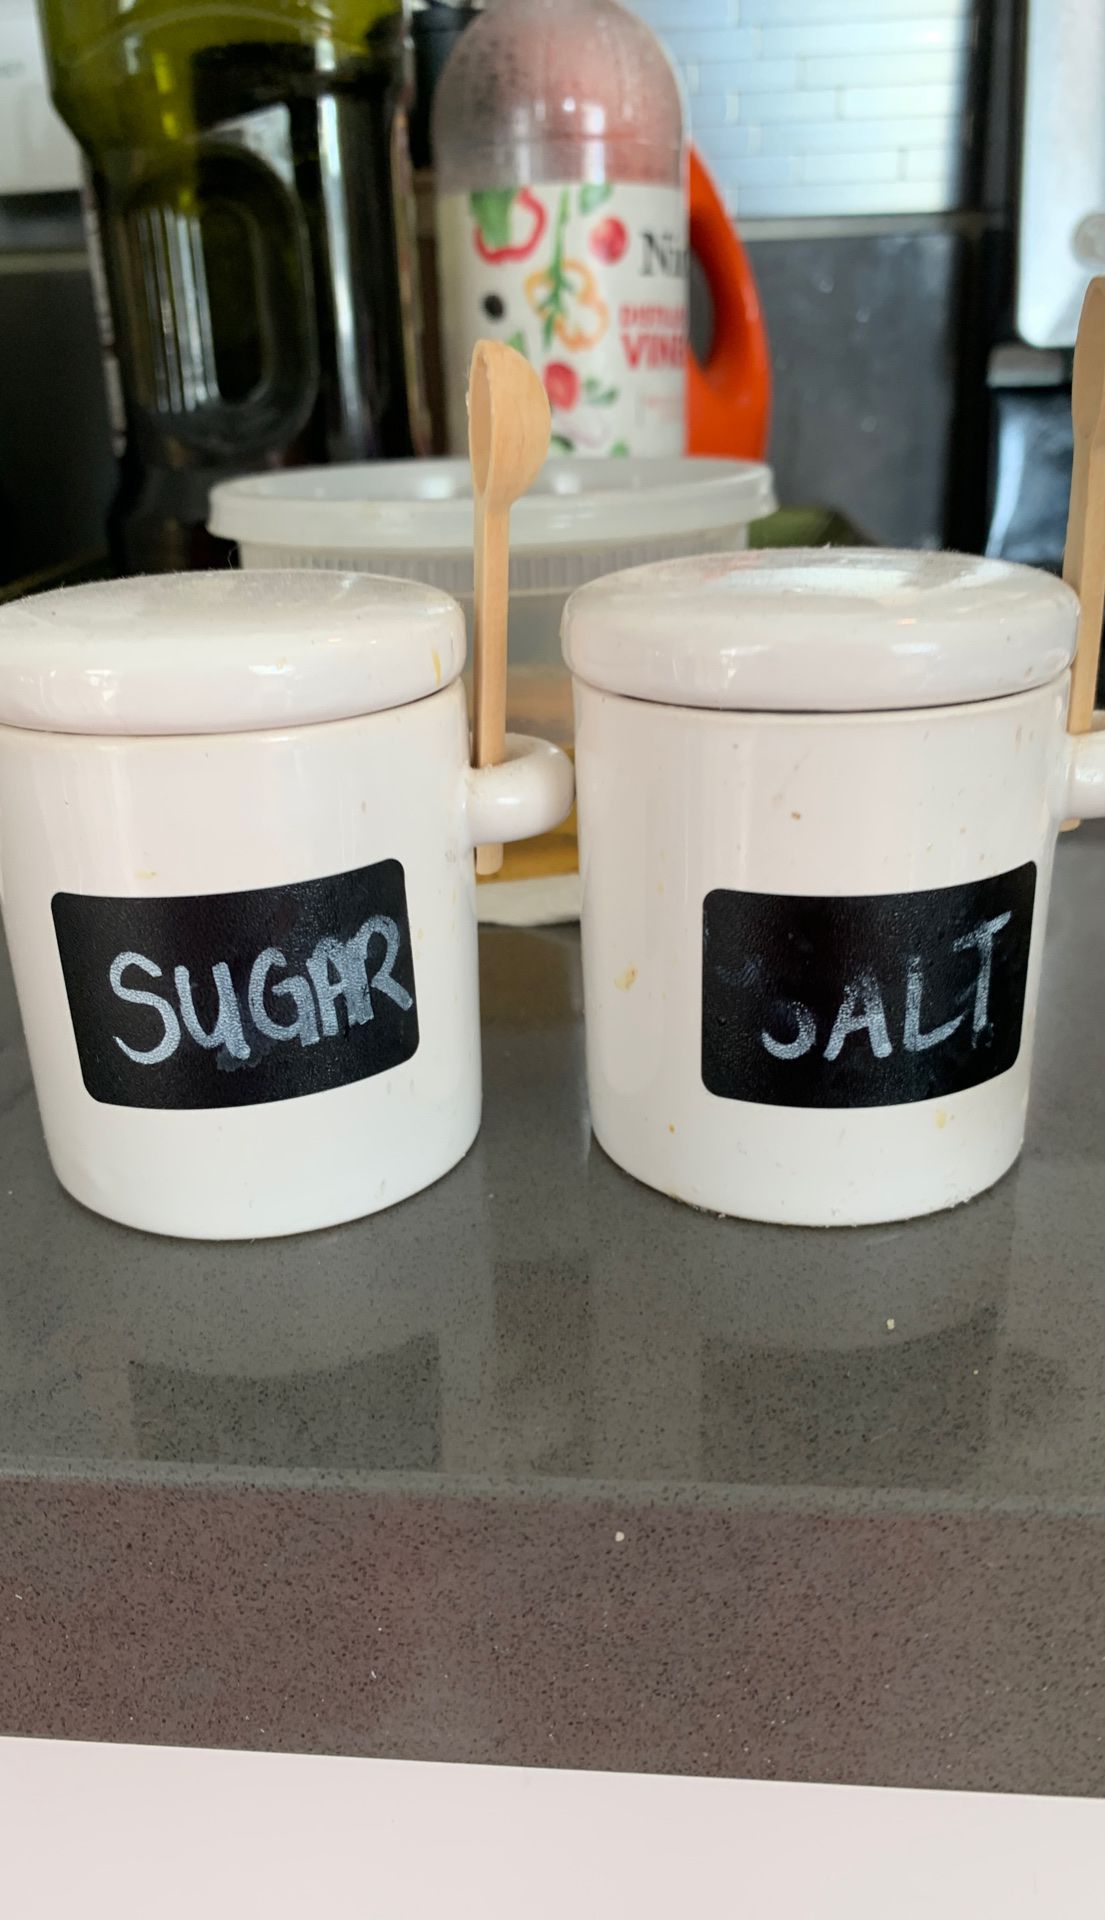 Salt and sugar spice holder